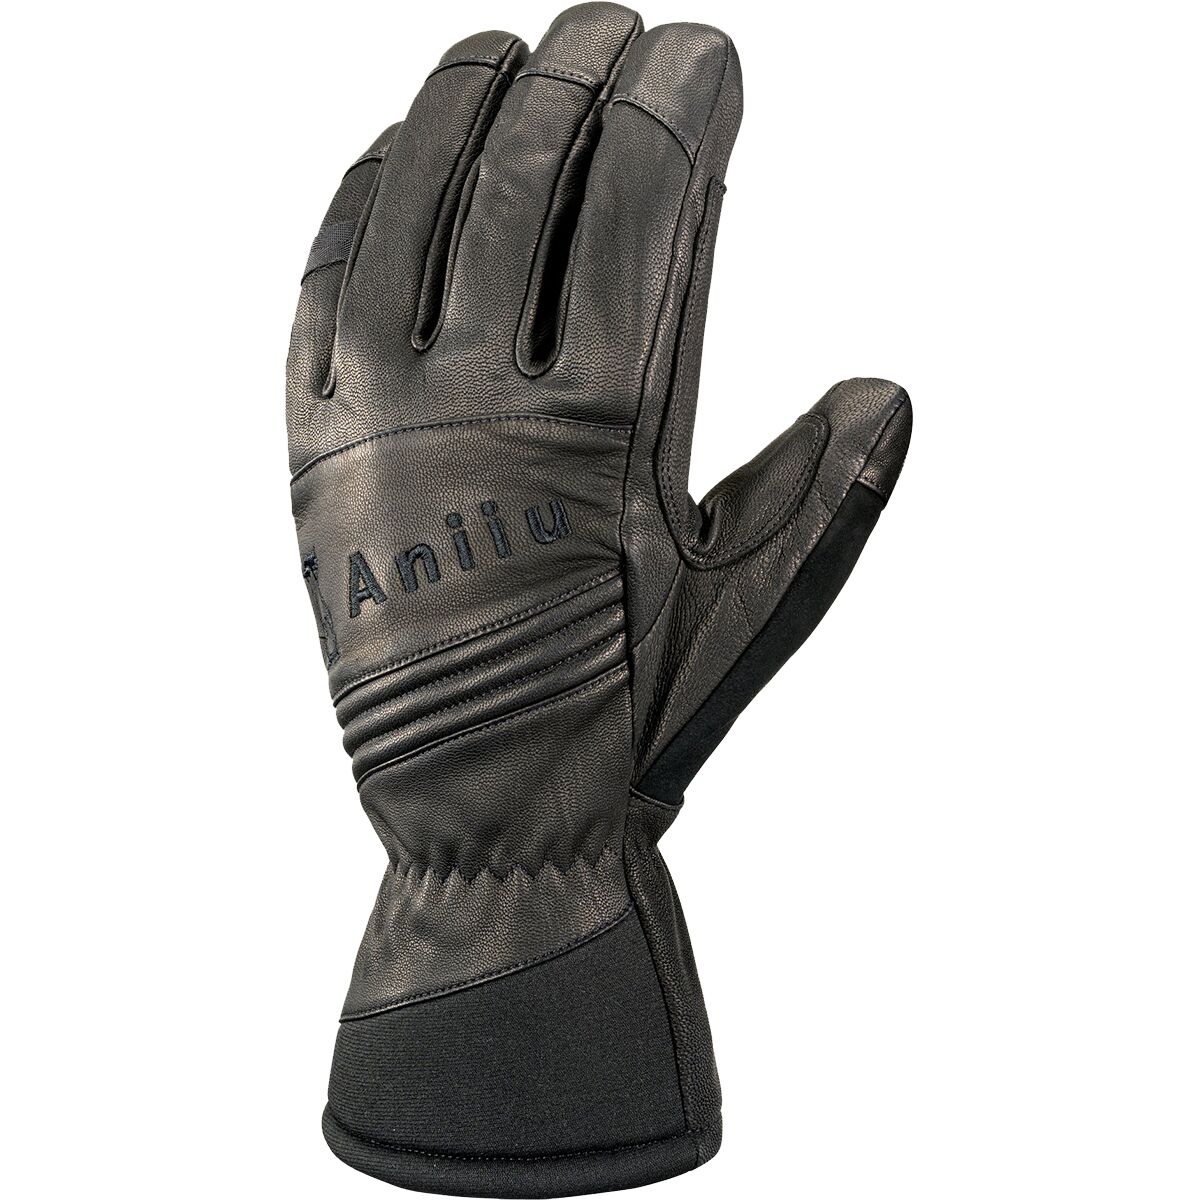 Aniiu Tyree Short Pro Glove - Men's Tuxedo Black